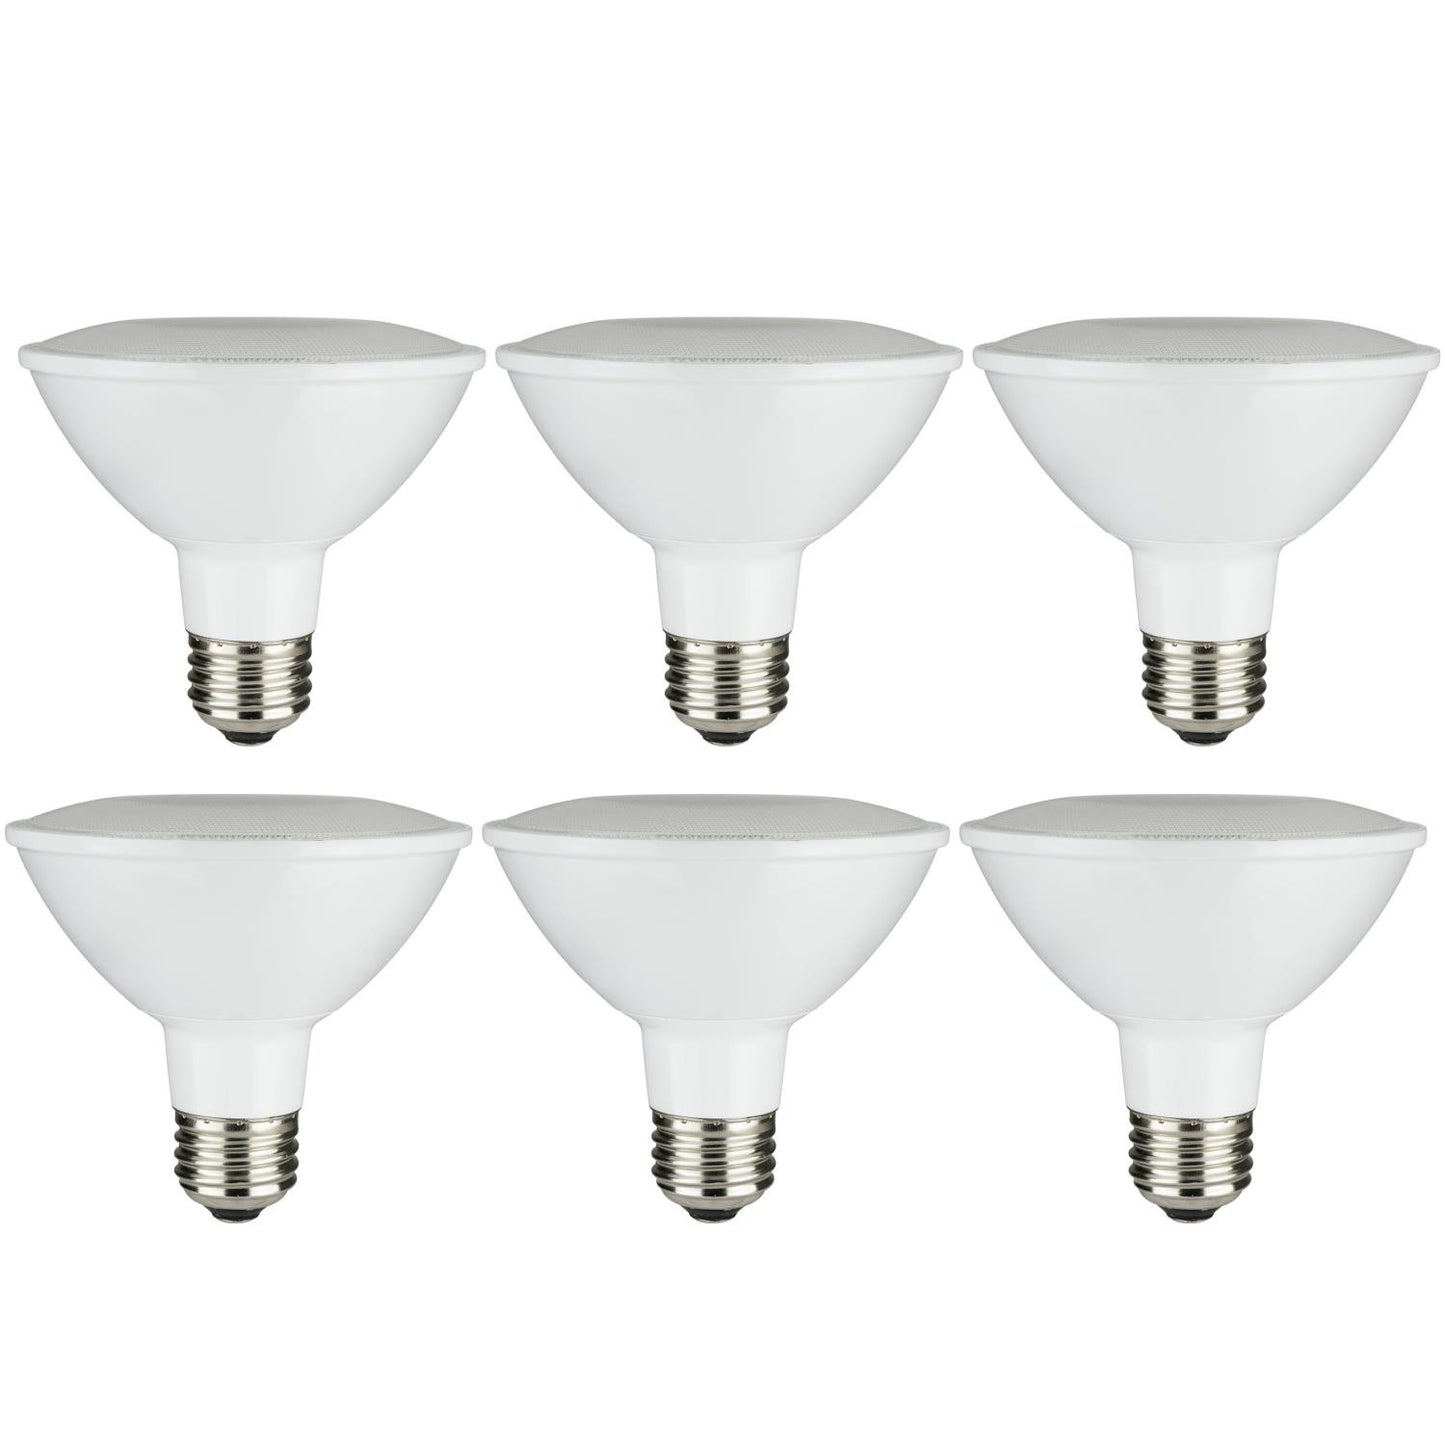 Sunlite LED PAR30 Reflector HE Series 10.5W (60W Equivalent) Light Bulb Medium (E26) Base, Warm White